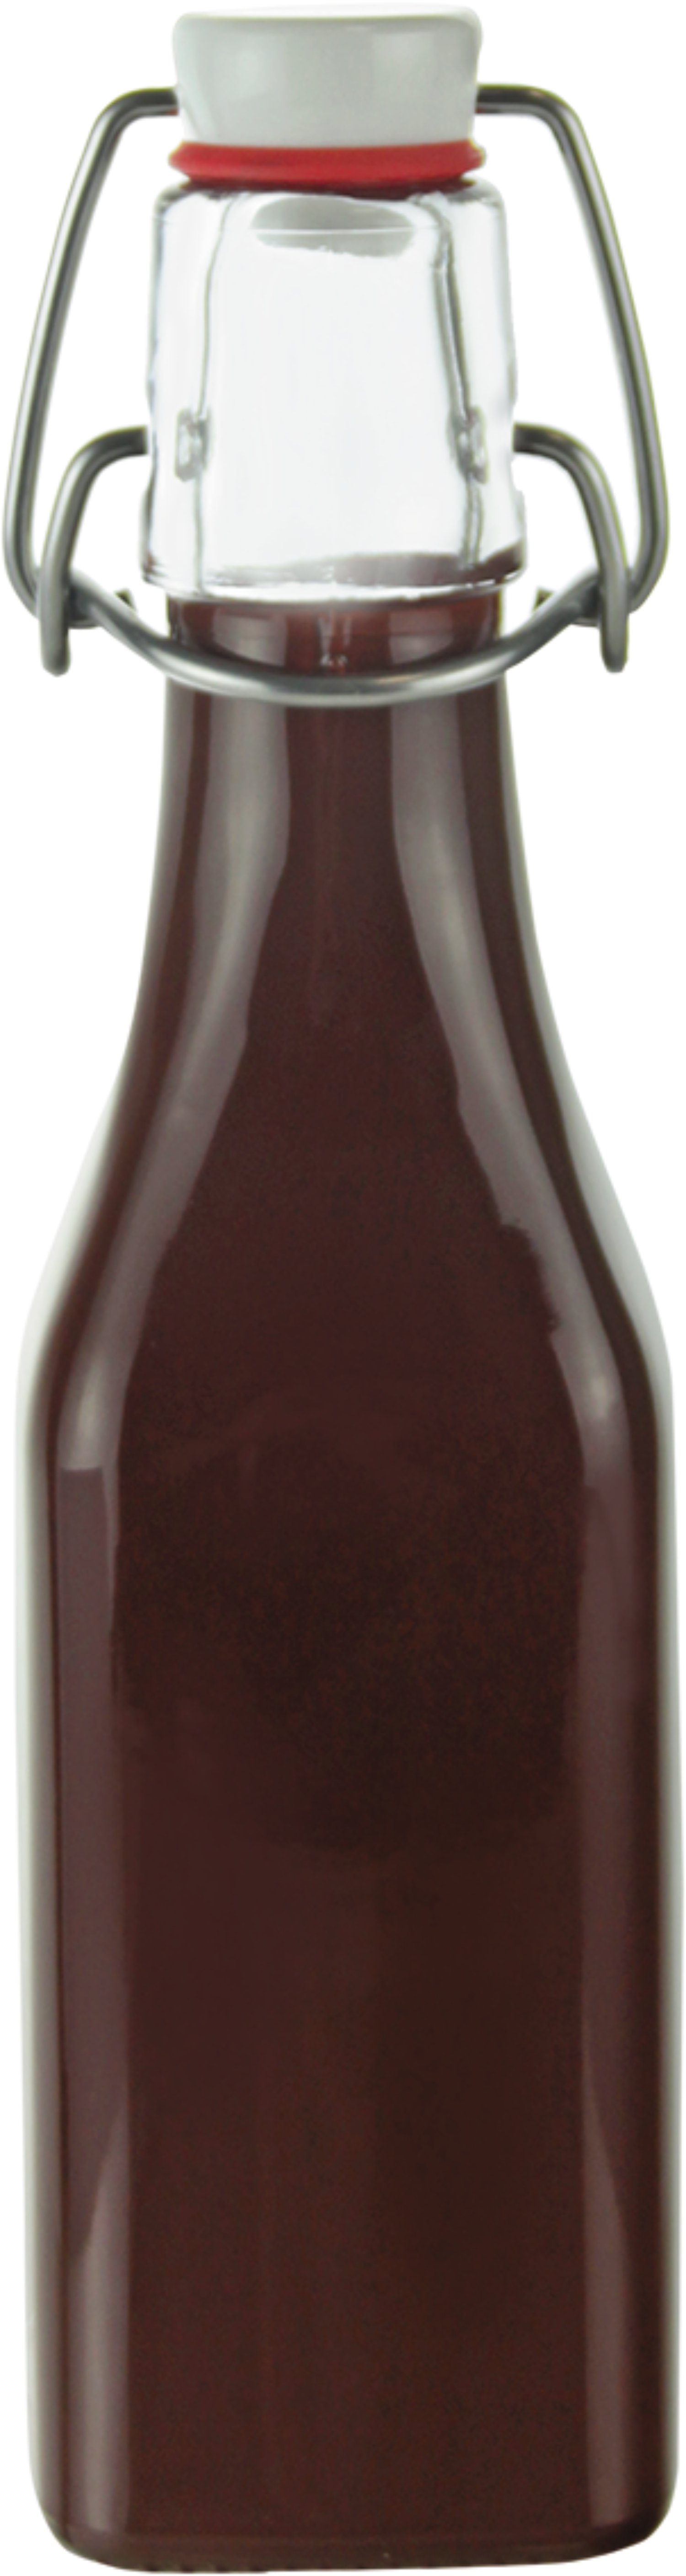 Saftflasche Myrex 4you braun, 250 ml